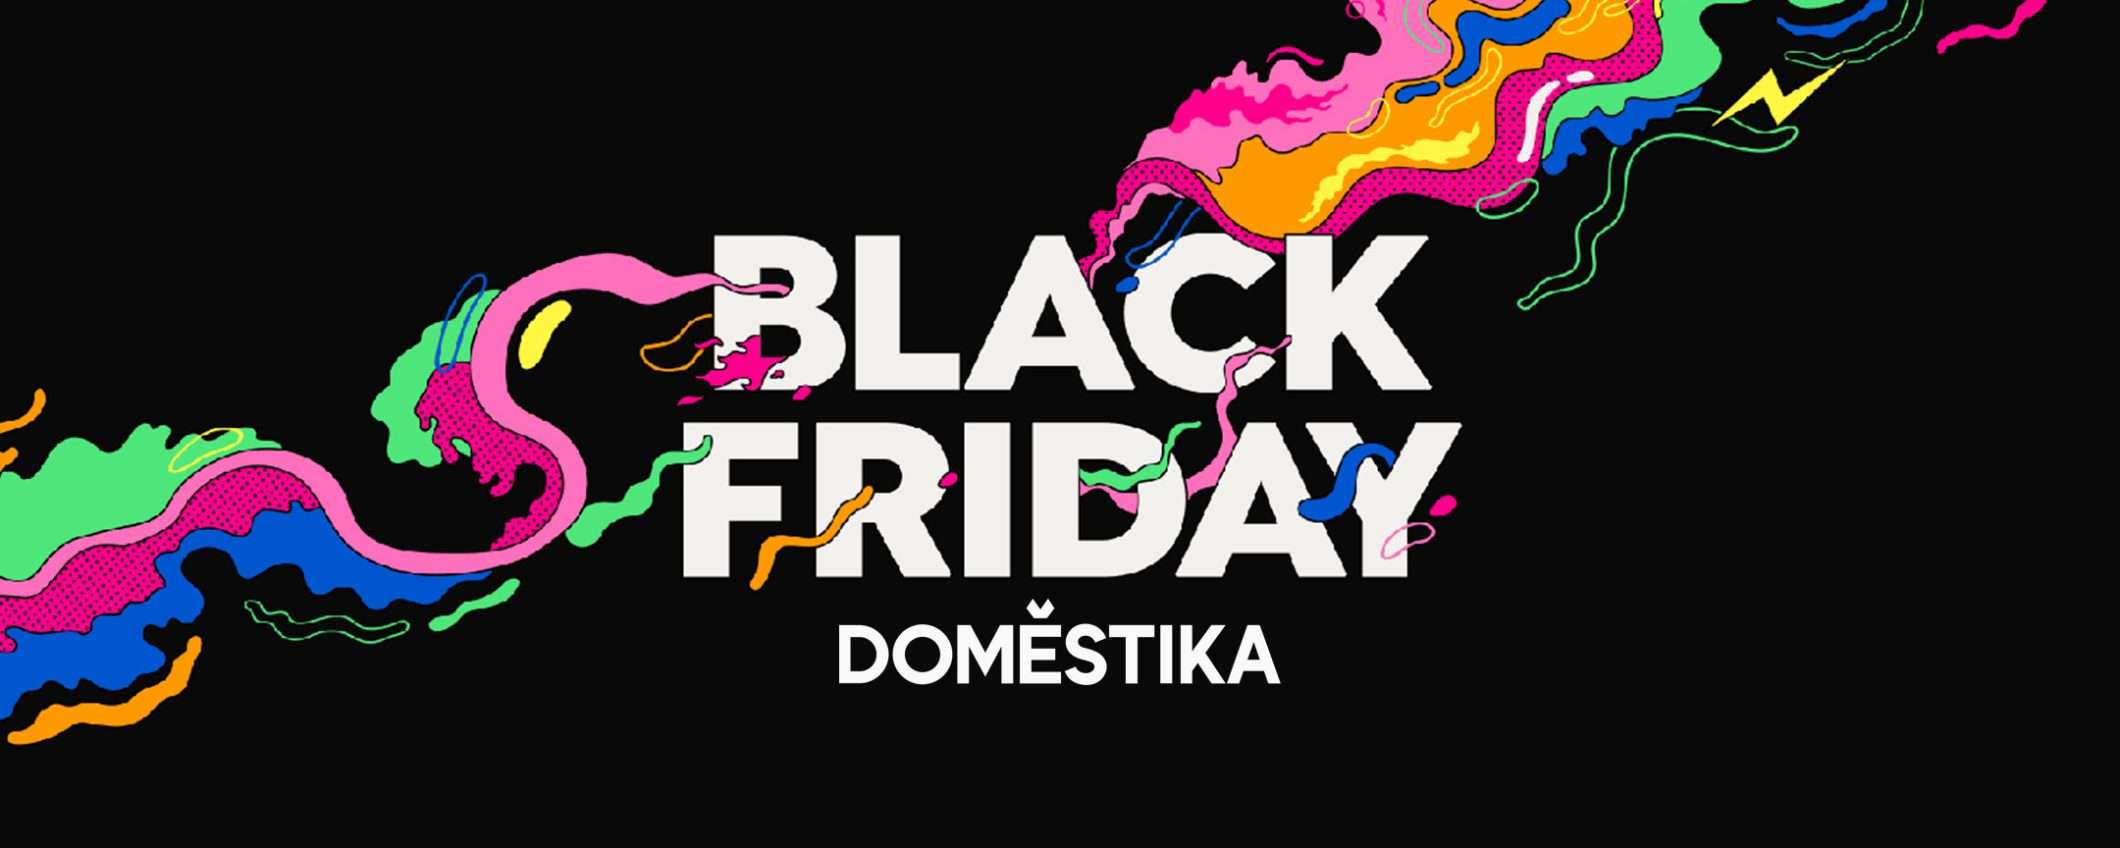 Black Friday, l'intero catalogo Domestika a 9,90€